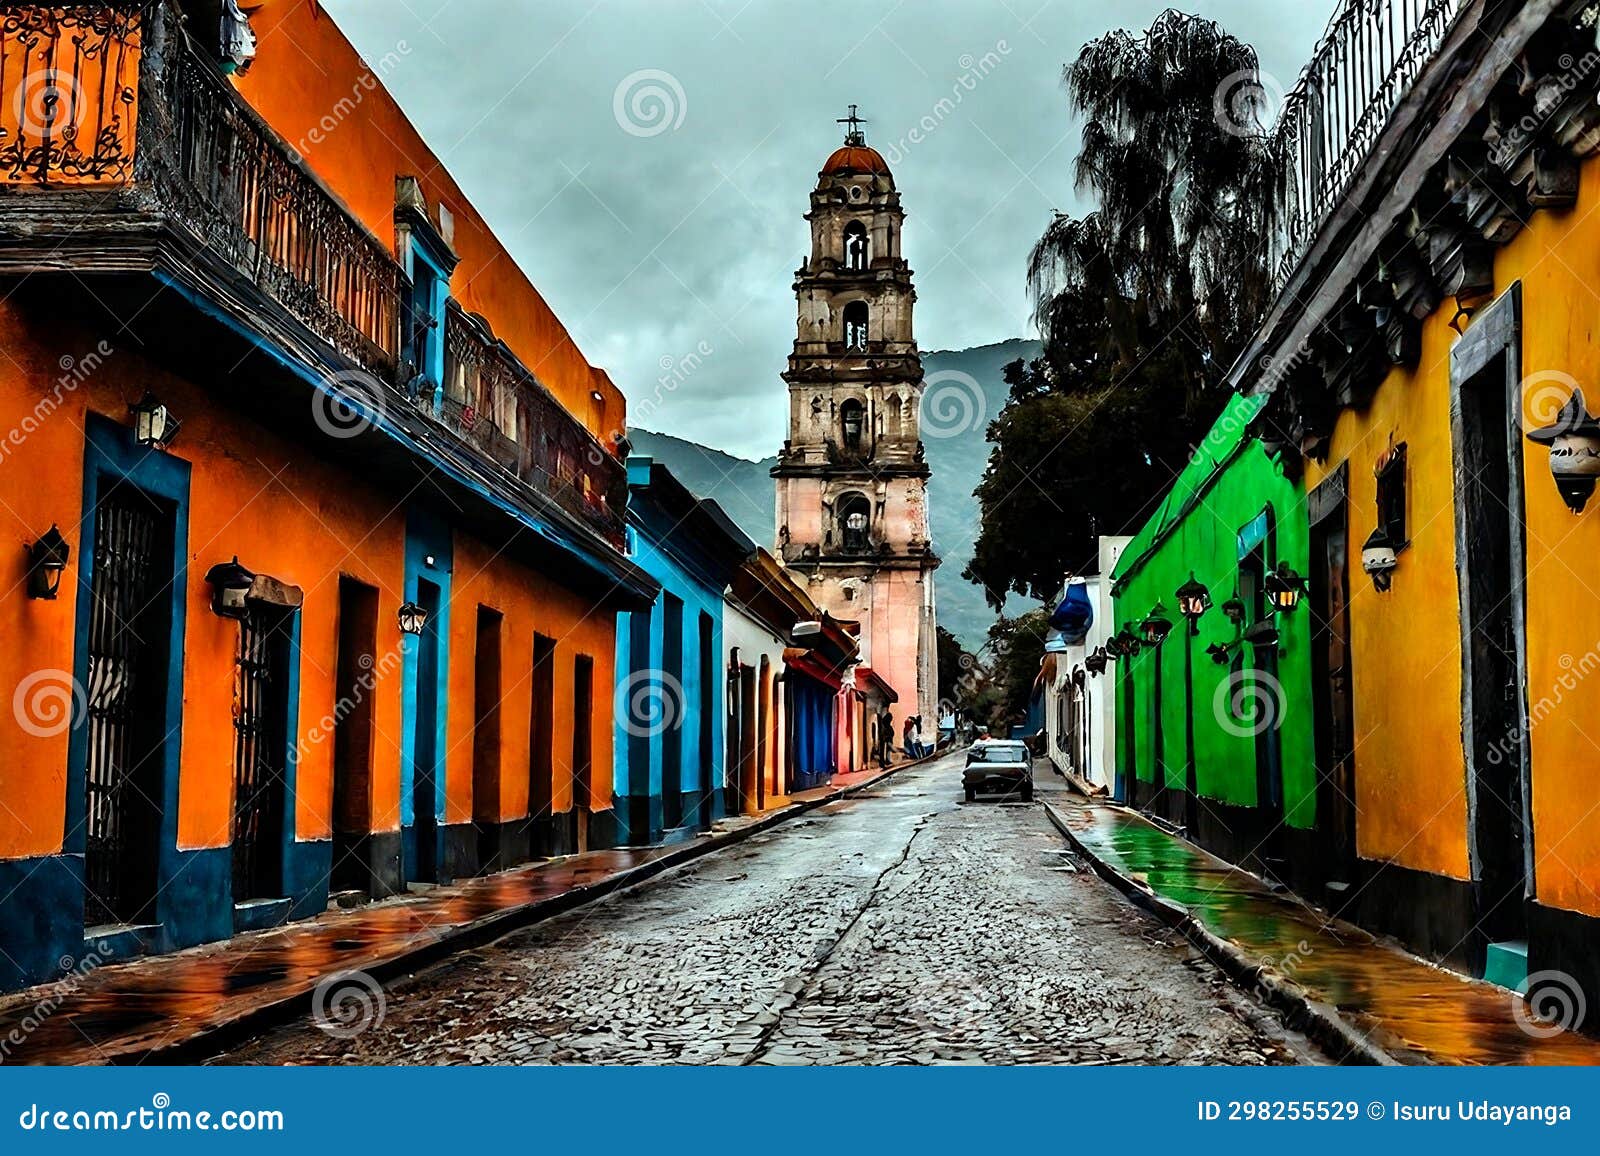 old mexican city. san jose del pacifico streets. cinematic photograph